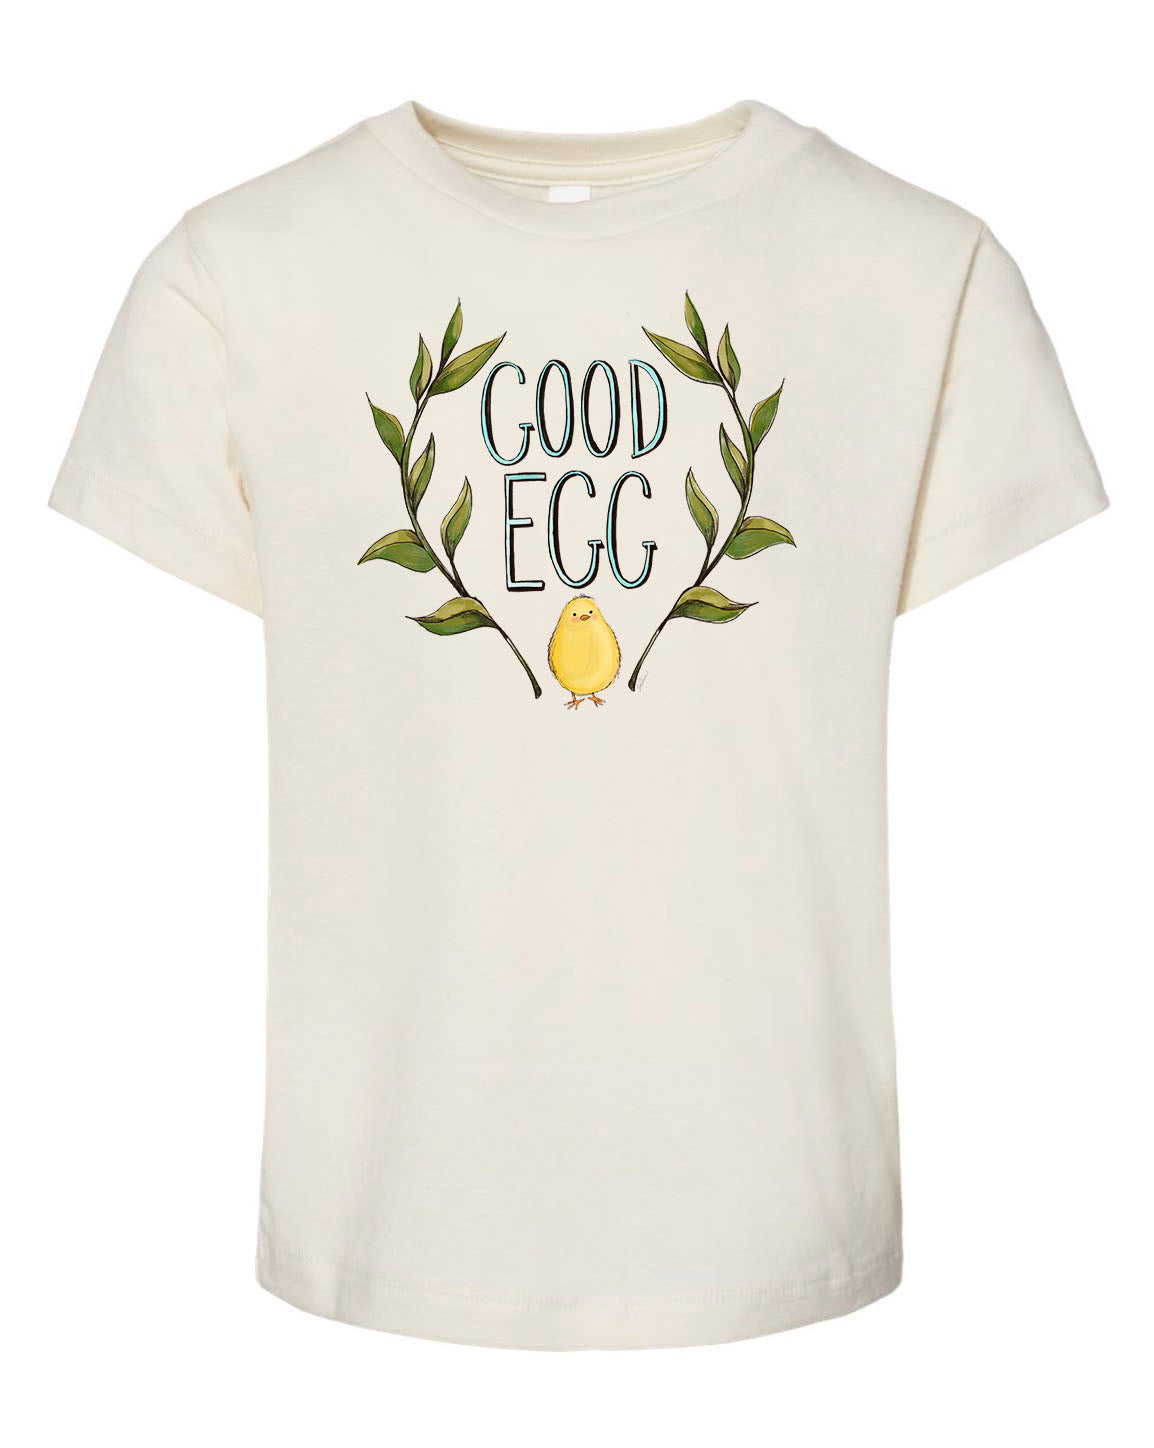 Good Egg [Cotton Children's Tee]